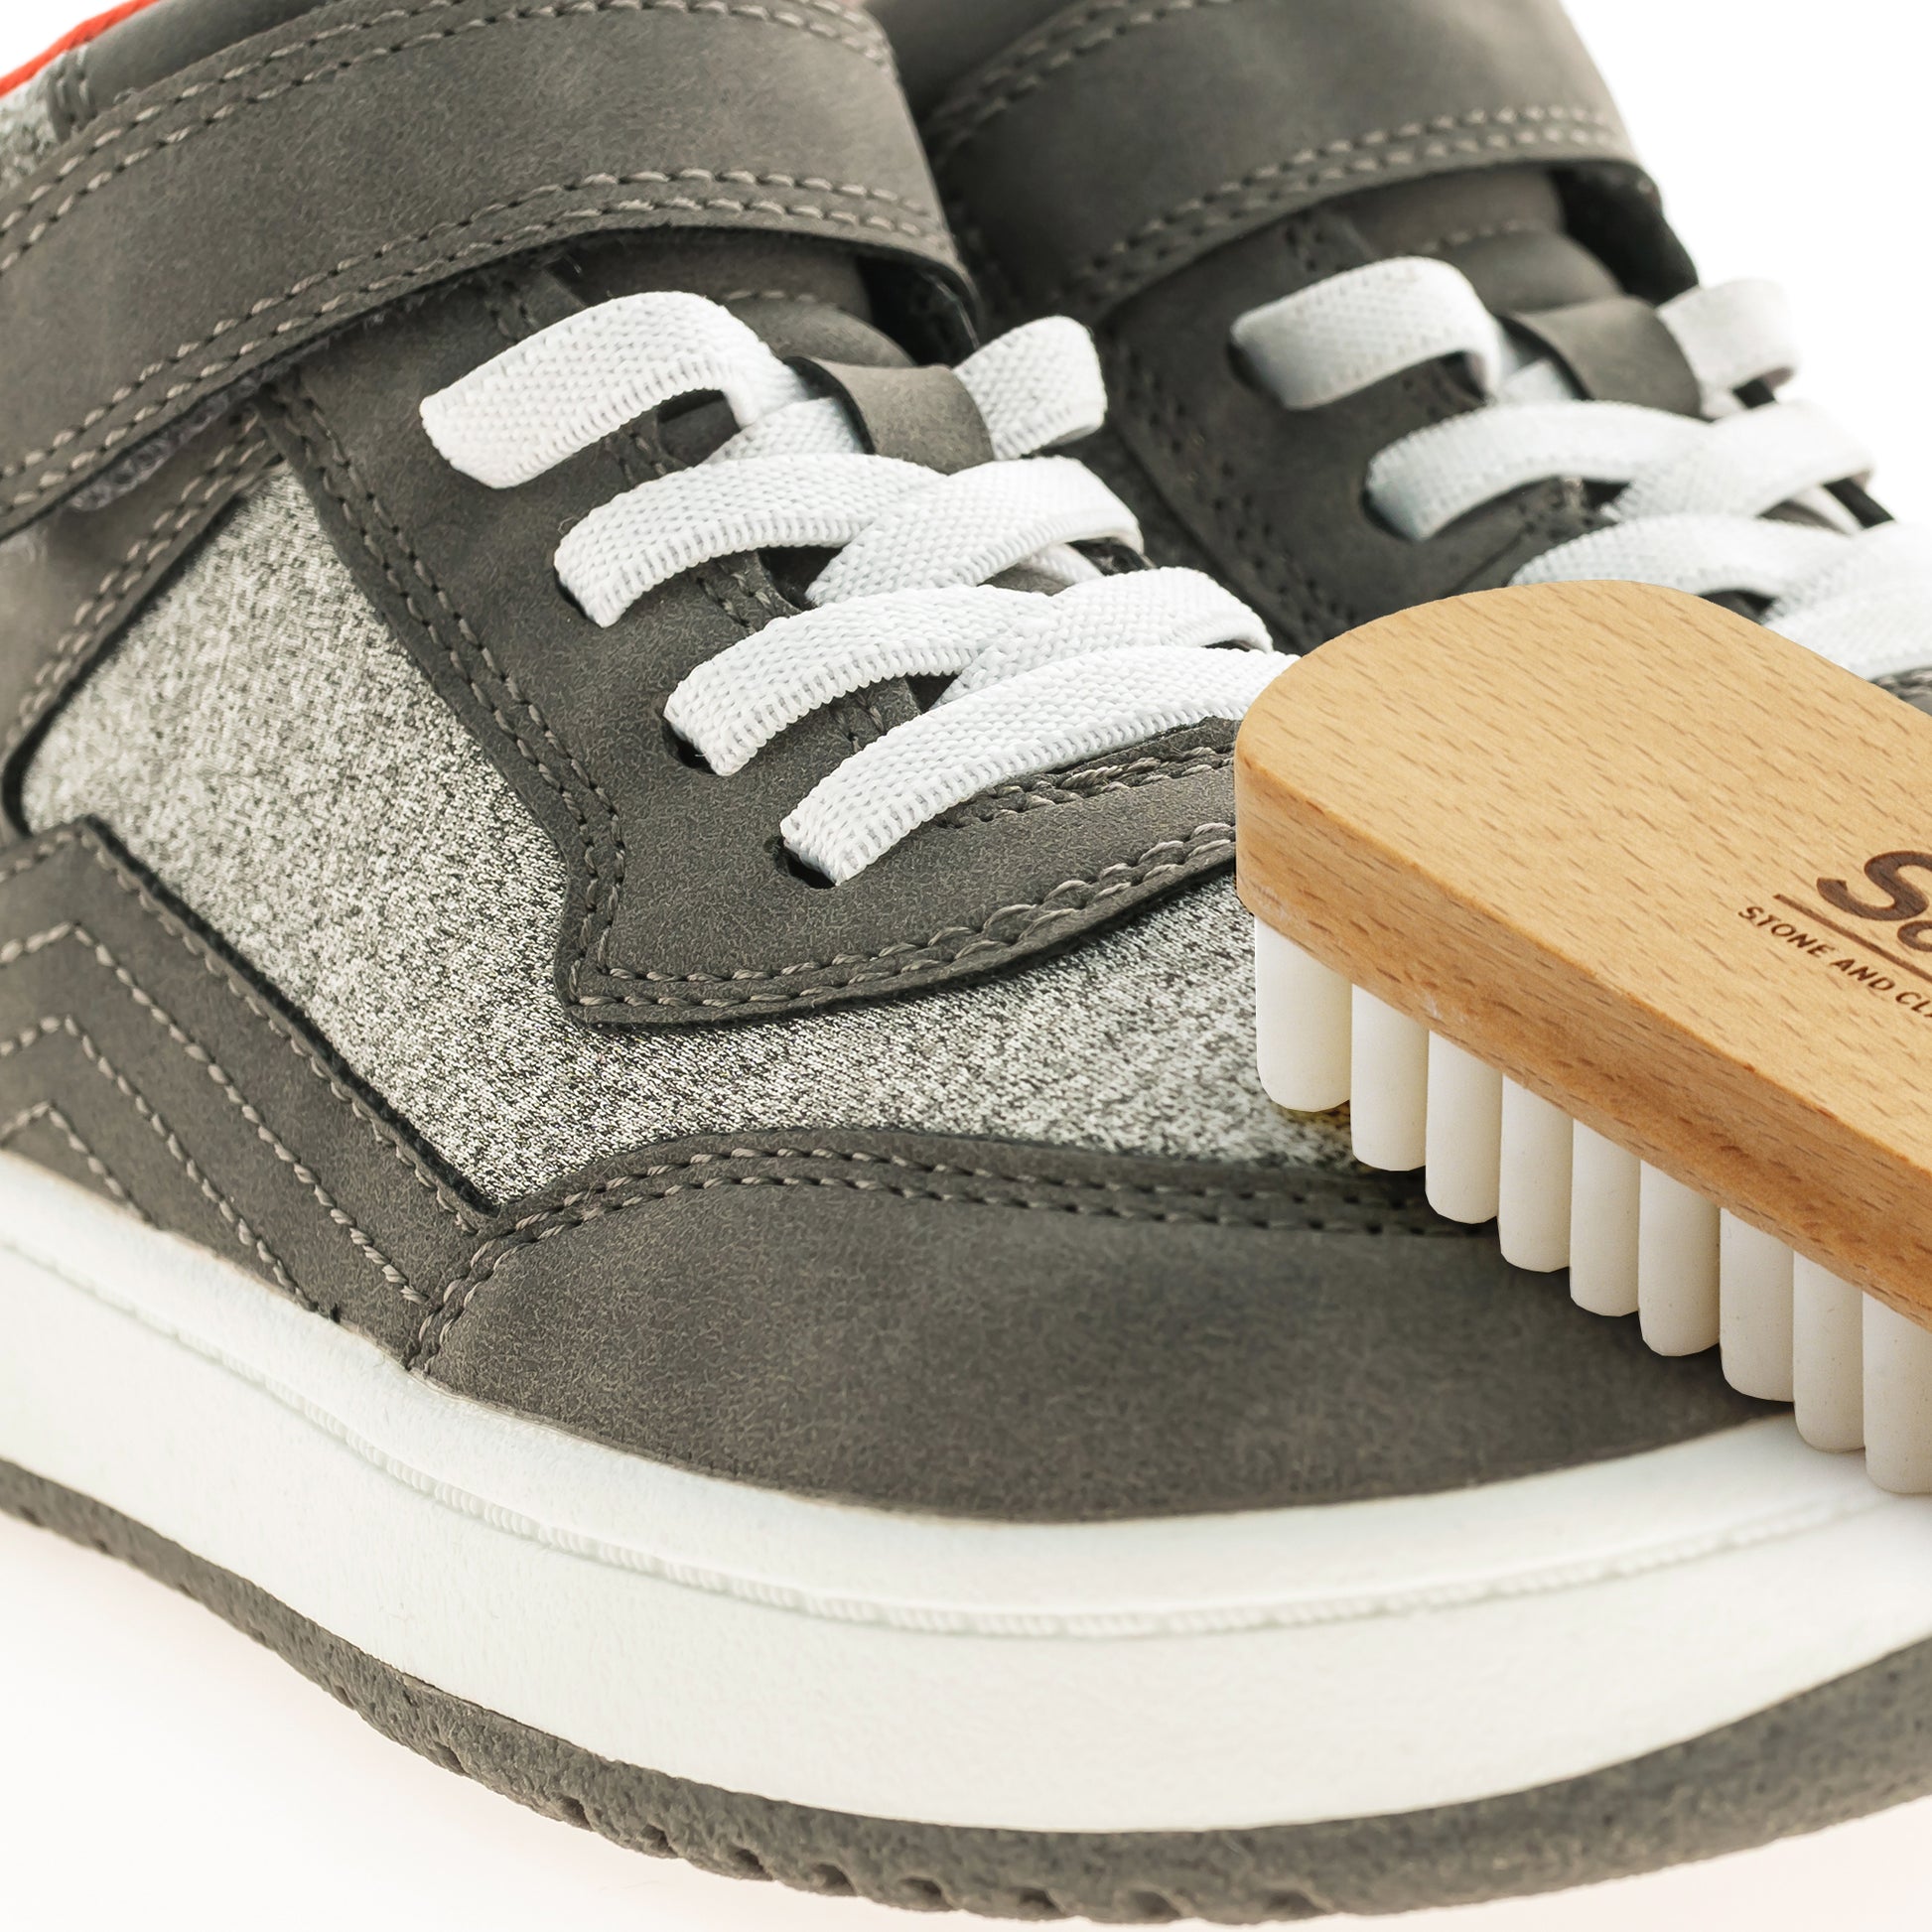 Premium Soft Bristle Shoe Cleaning Brush – Gold Standard